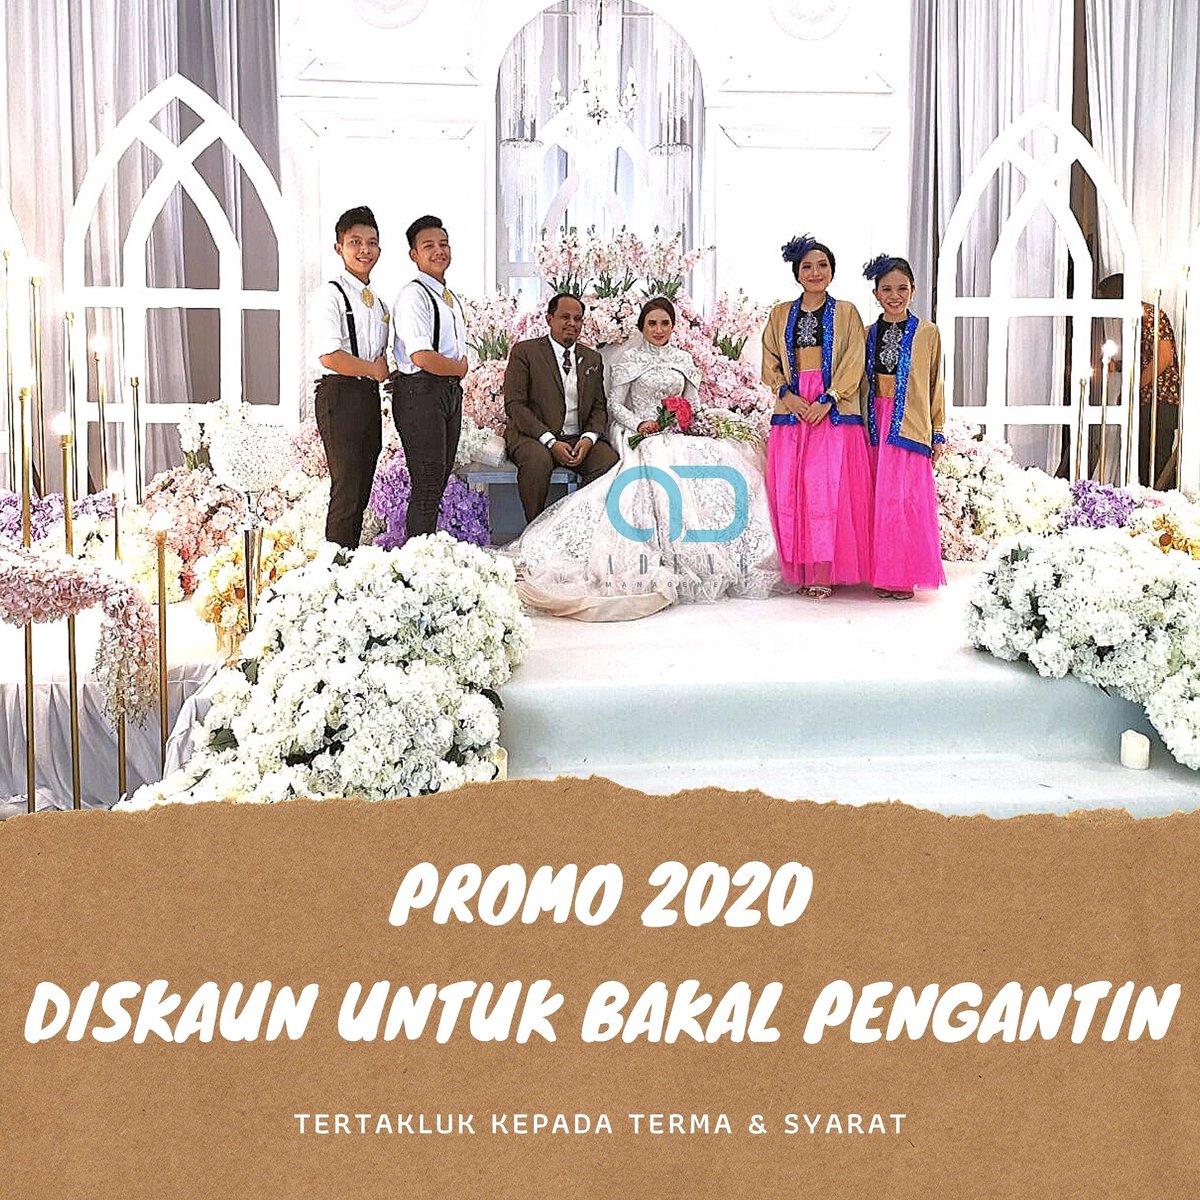 Promo tahun 2020* Cepat inbox kami sementara promo masih berlangsung.
#tarialsakti #adengmanagement #promo #promo2020 #wedding #reception #majlisperkahwinan #majlispersandingan #pengantin #rajasehari #inang #zapin #joget #tarian #tariantradisional #malaysia #visitmalaysia2020